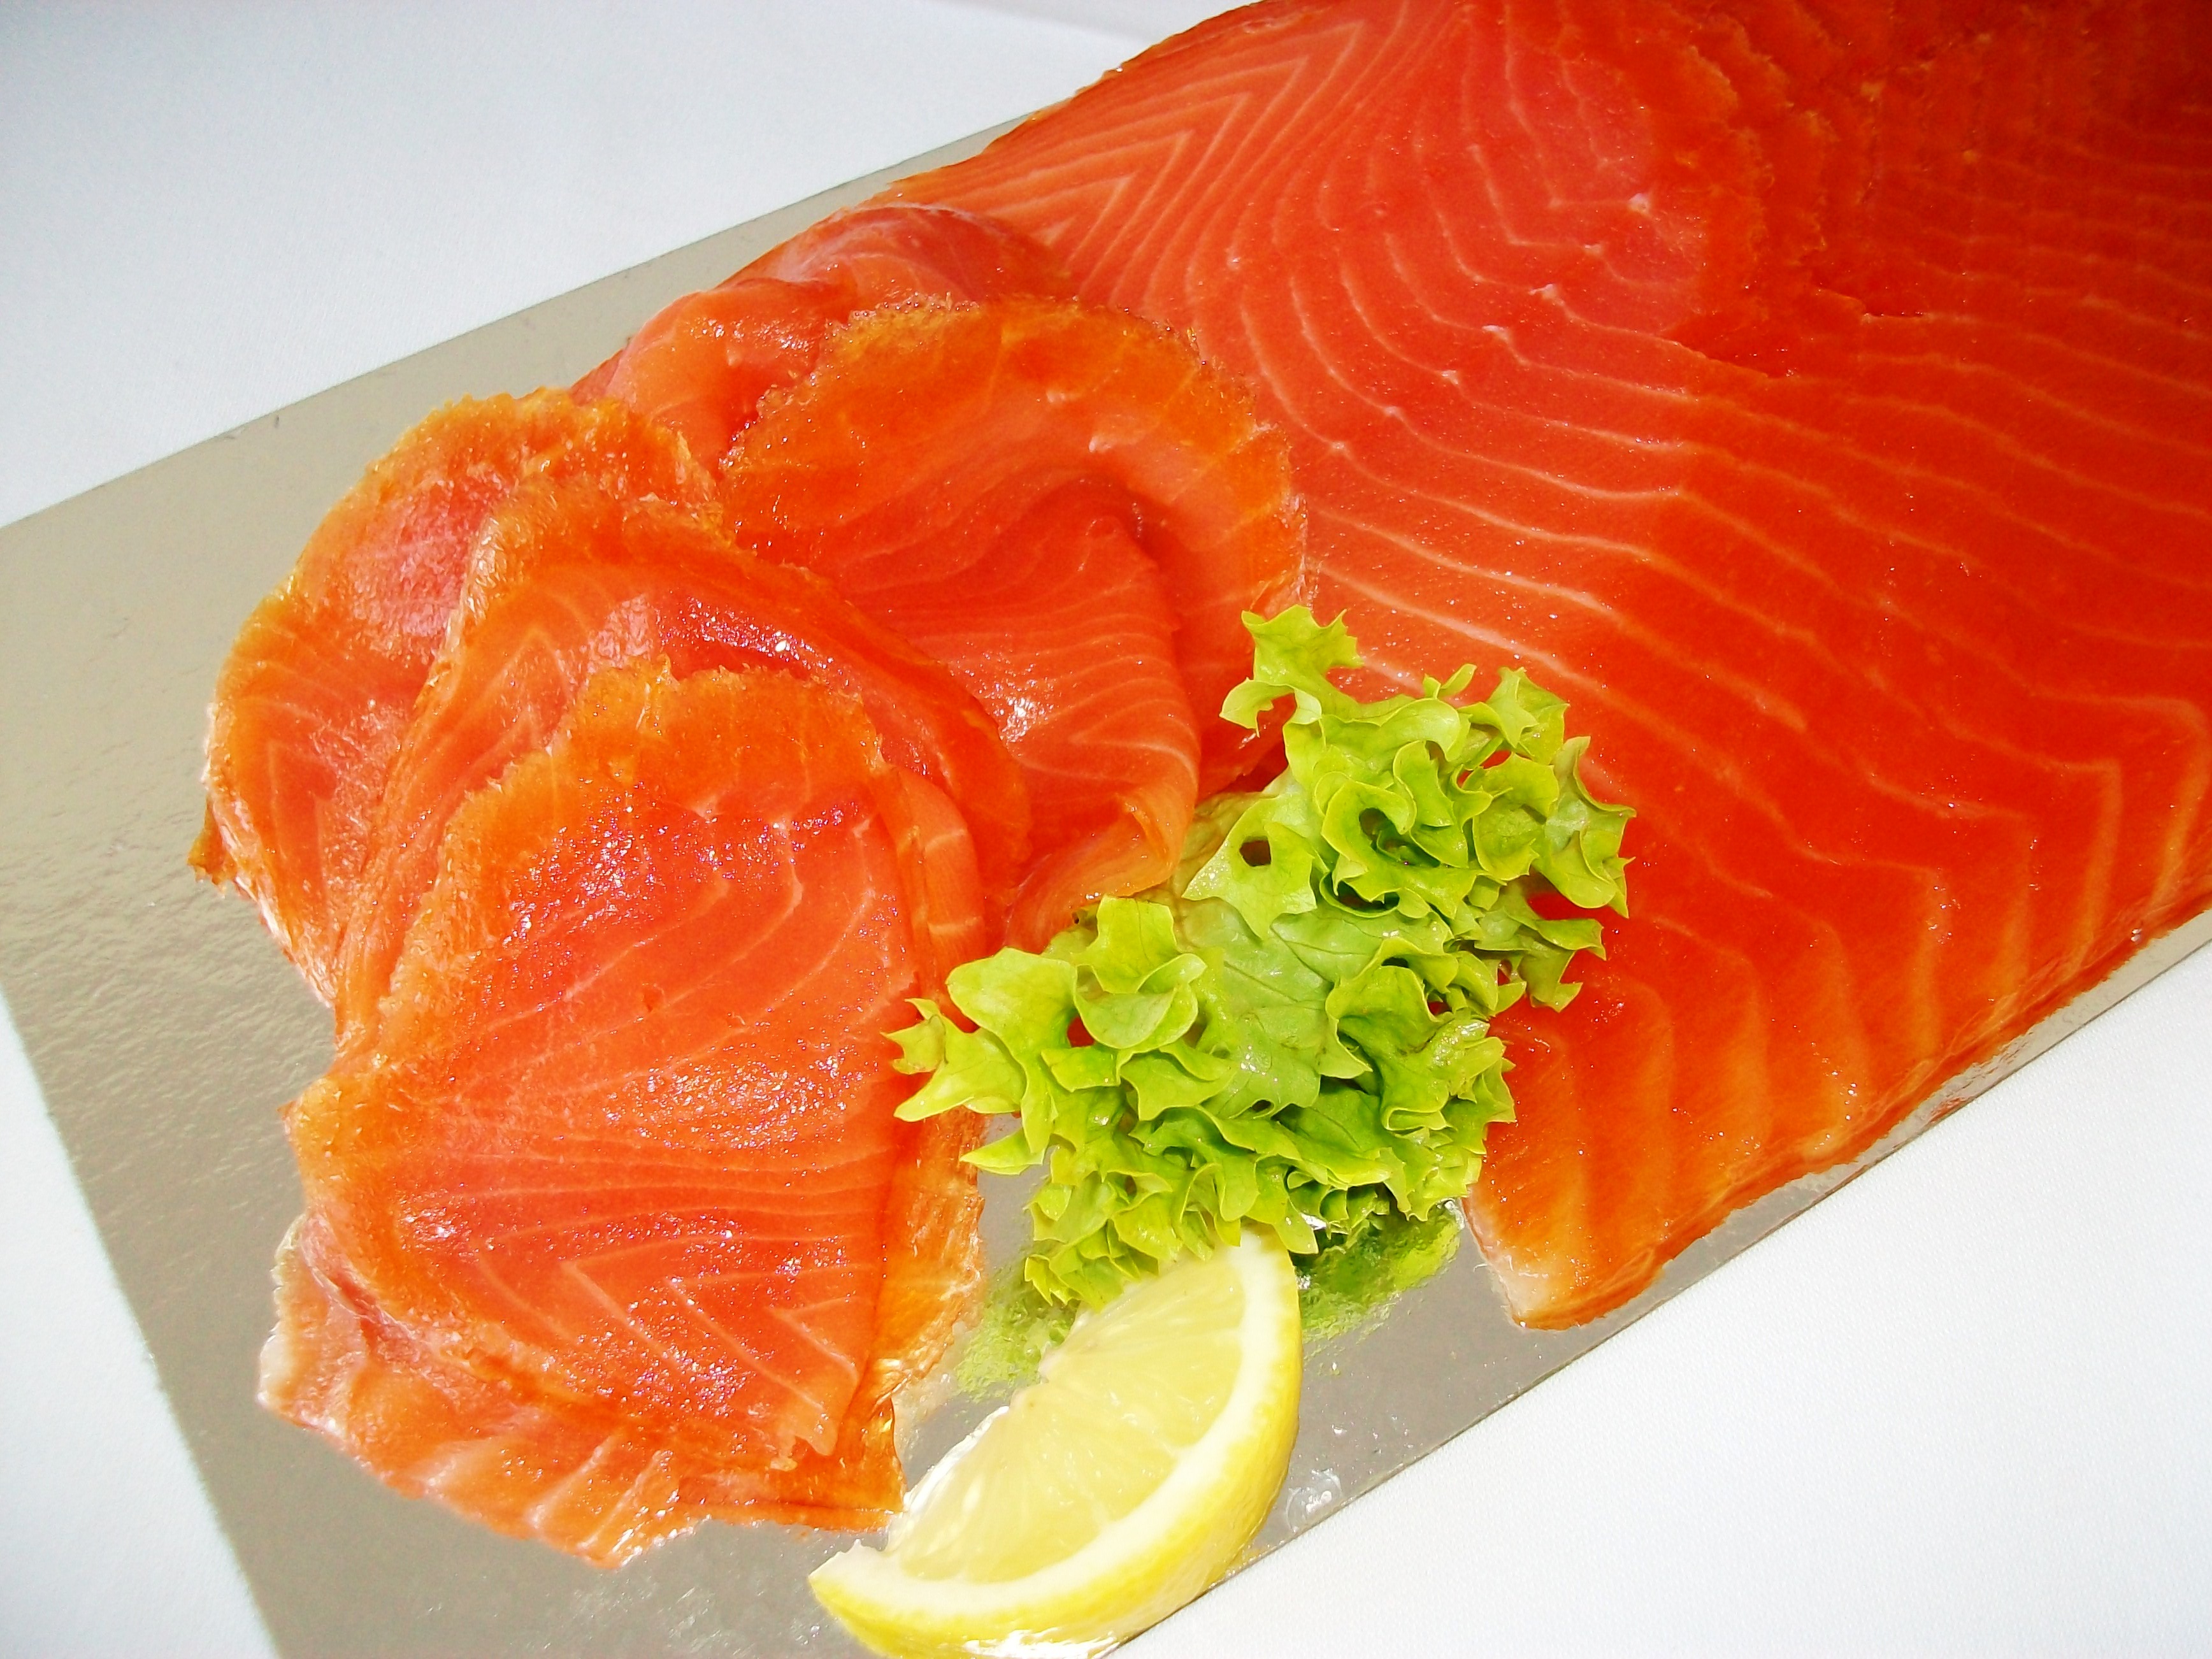 Nordic Salmon classic Räucherlachs geschnitten,ca. 500 g, inkl. 1 Gl. Sahnemeerrettich 45 g